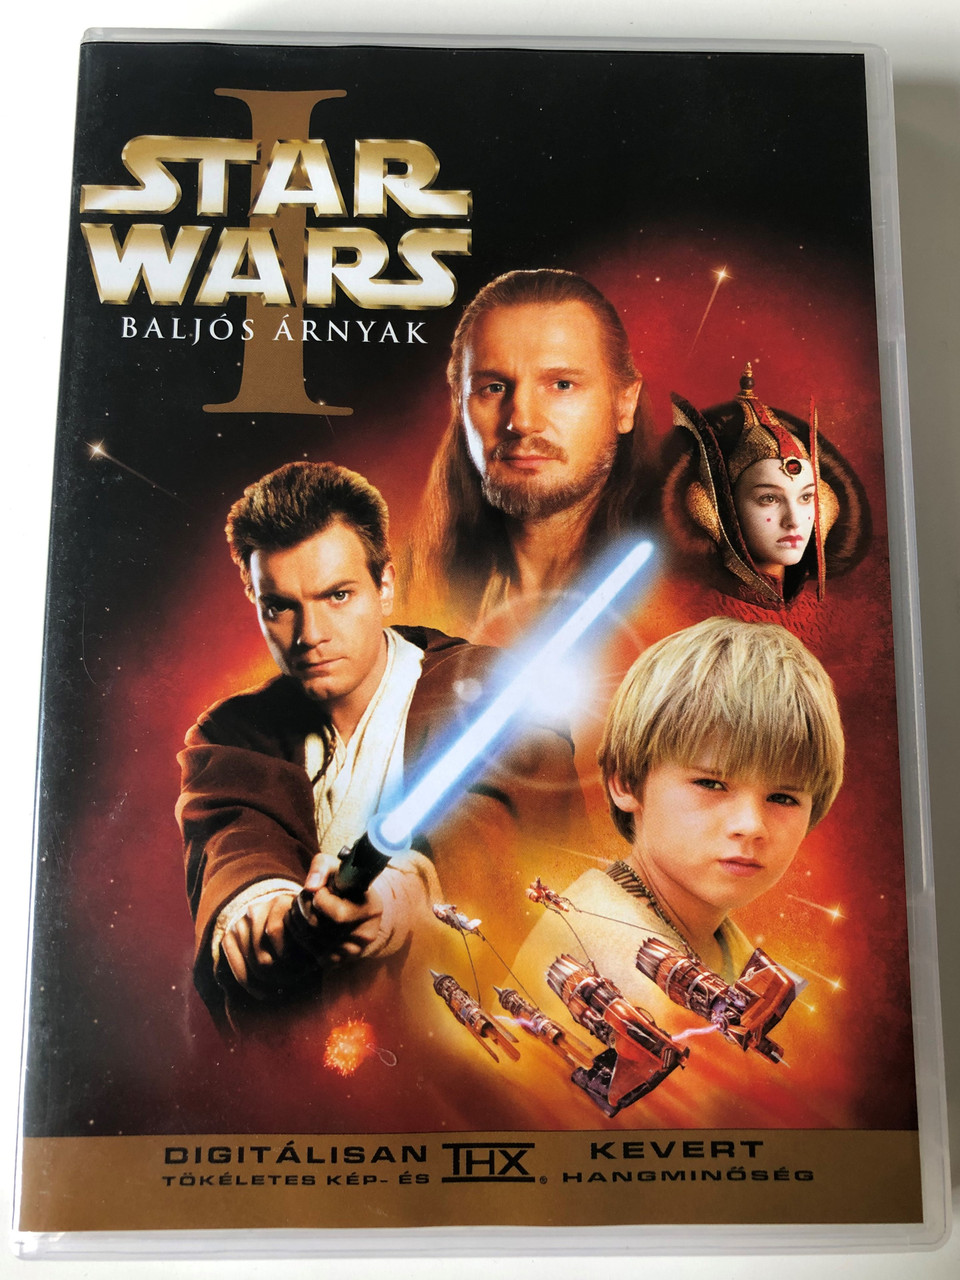 Star Wars: Episode I - The Phantom Menace DVD 1999 Star Wars I - Baljós  Árnyak / Directed by George Lucas / Starring: Liam Neeson, Ewan McGregor,  Natalie Portman - bibleinmylanguage